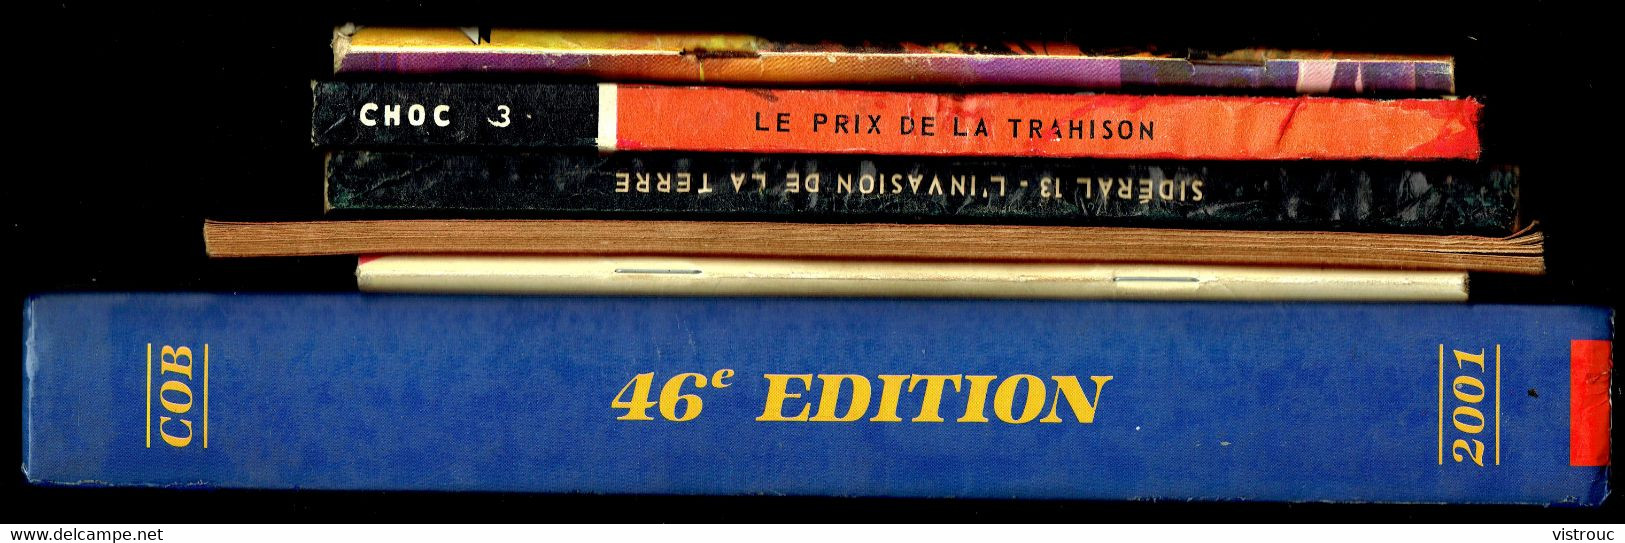 Catalogue PRINET De Timbres-postes Belges - Edition FR - 1954 - Table Des Matières En Scan 2. - Belgium